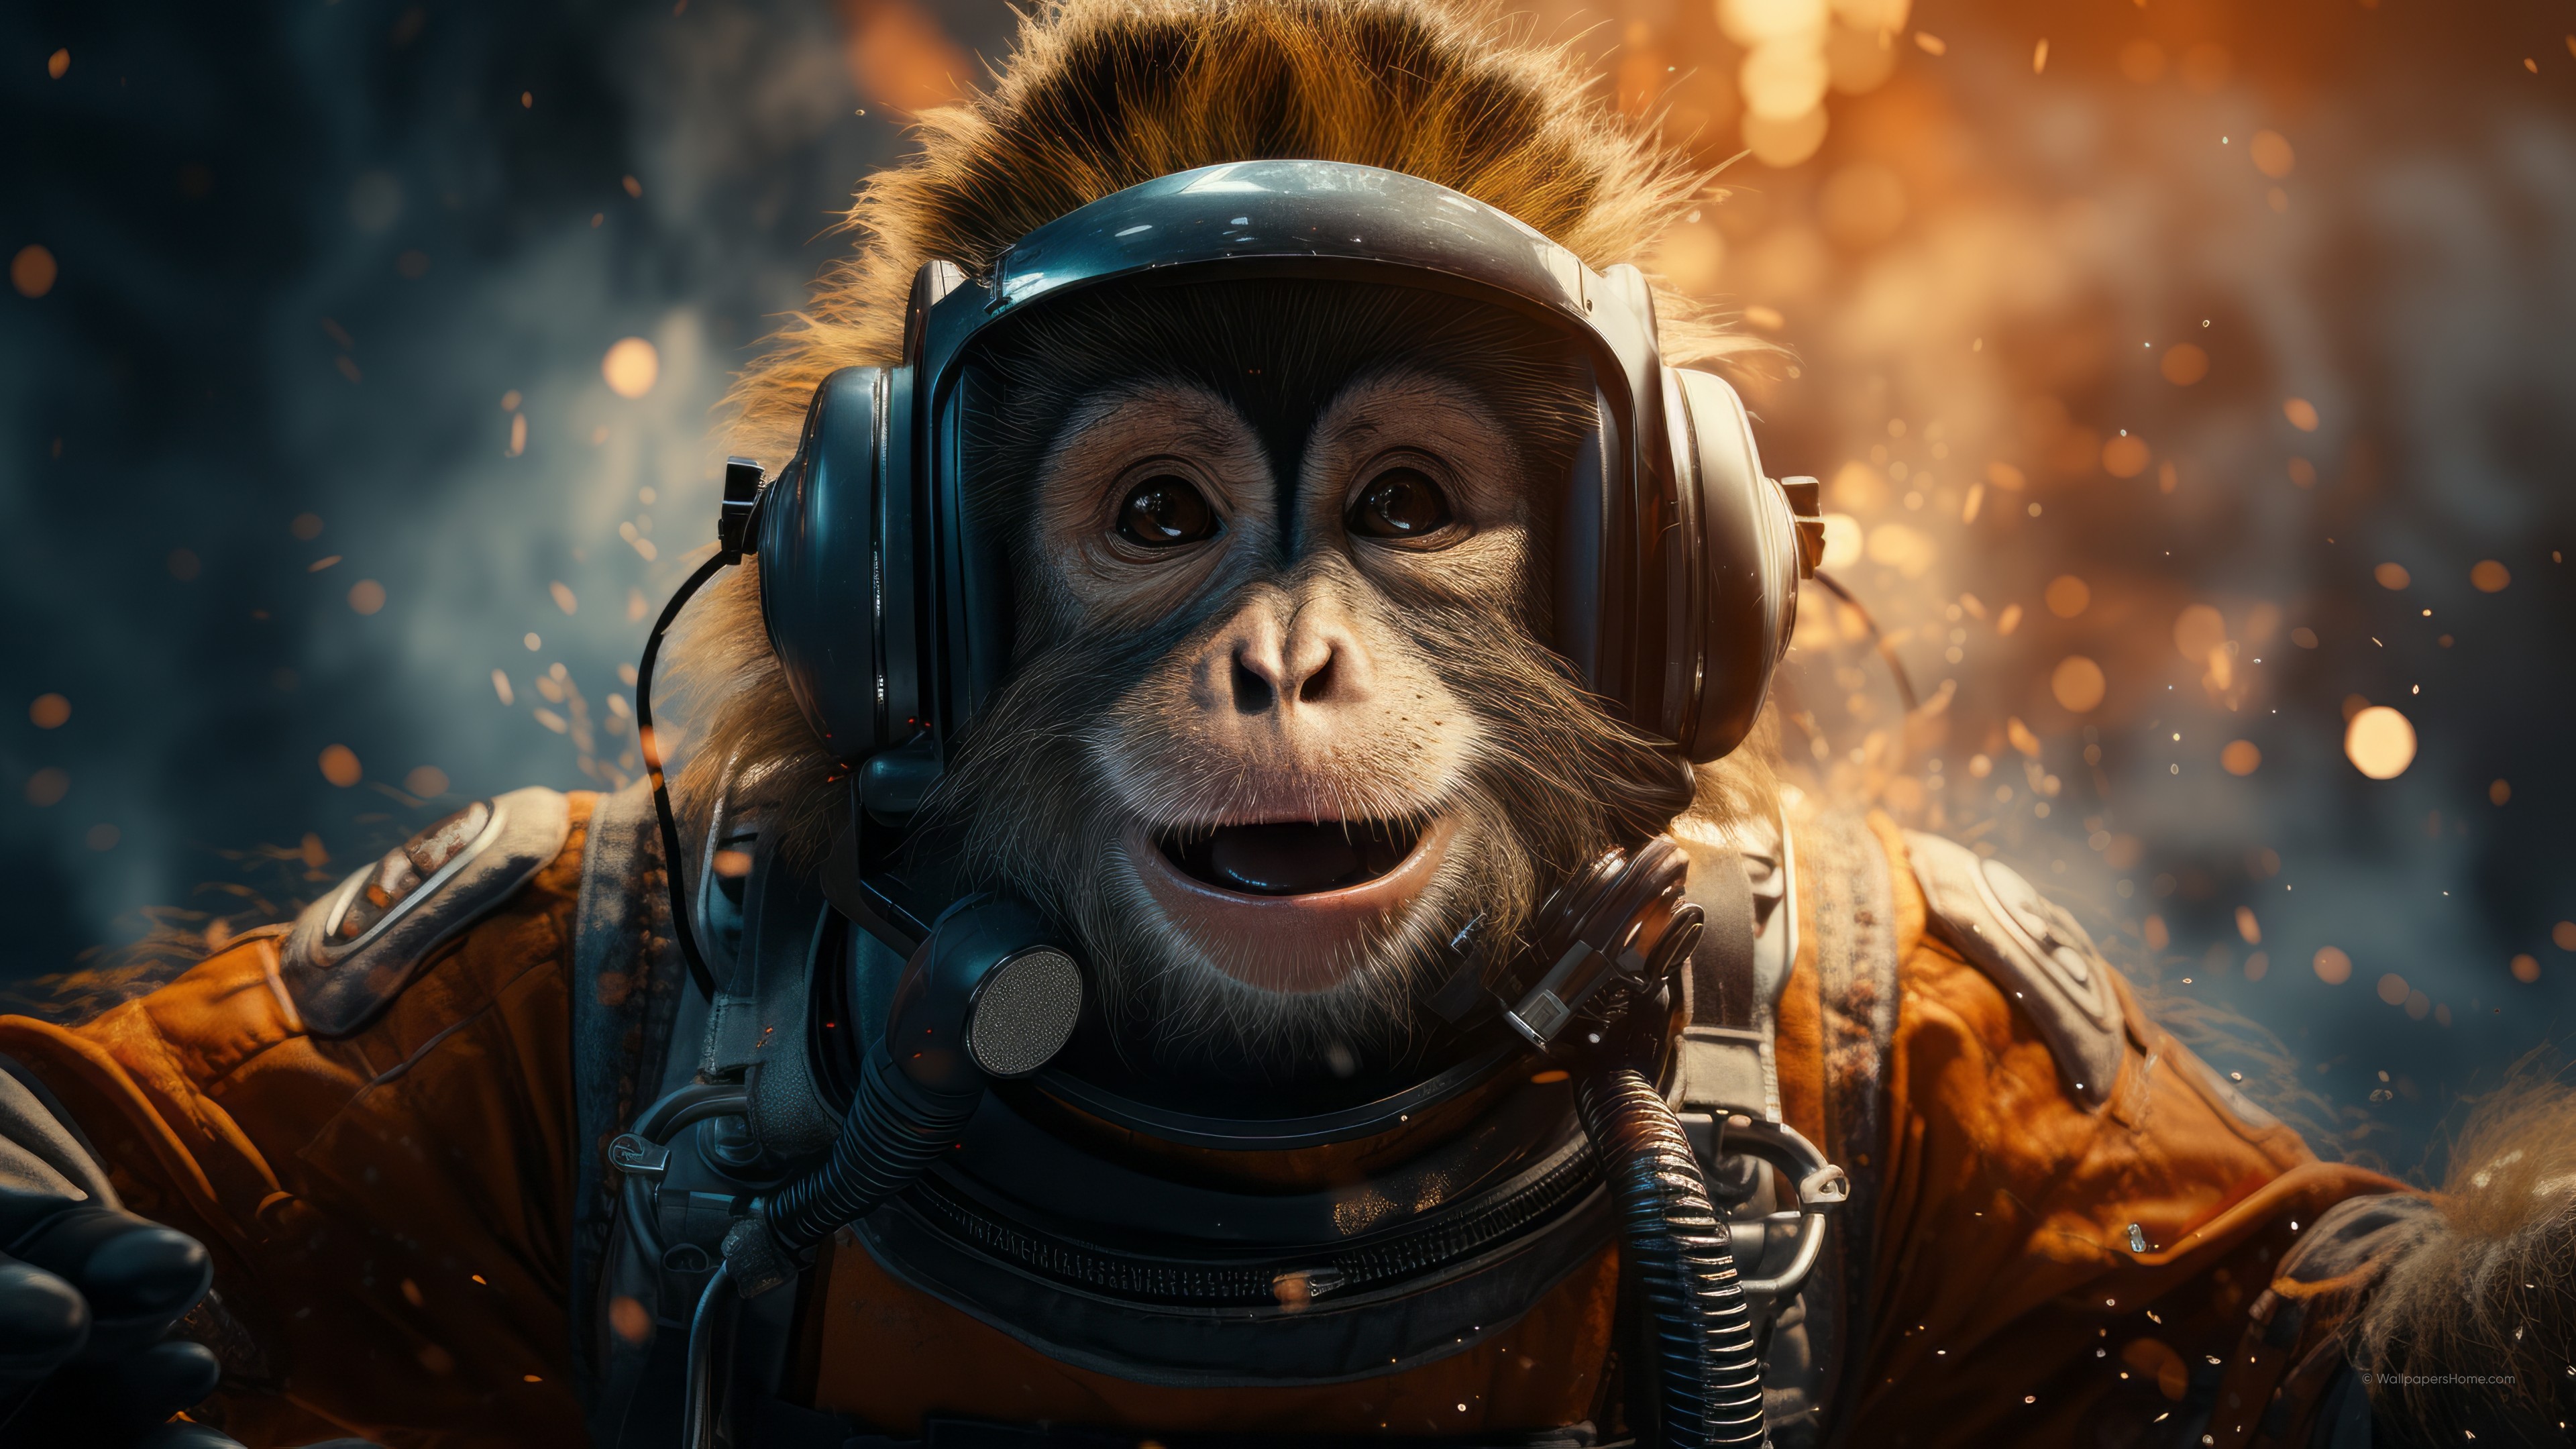 Space monkey. Обои с обезьянами. Monkey avatar. Monkey in Space.